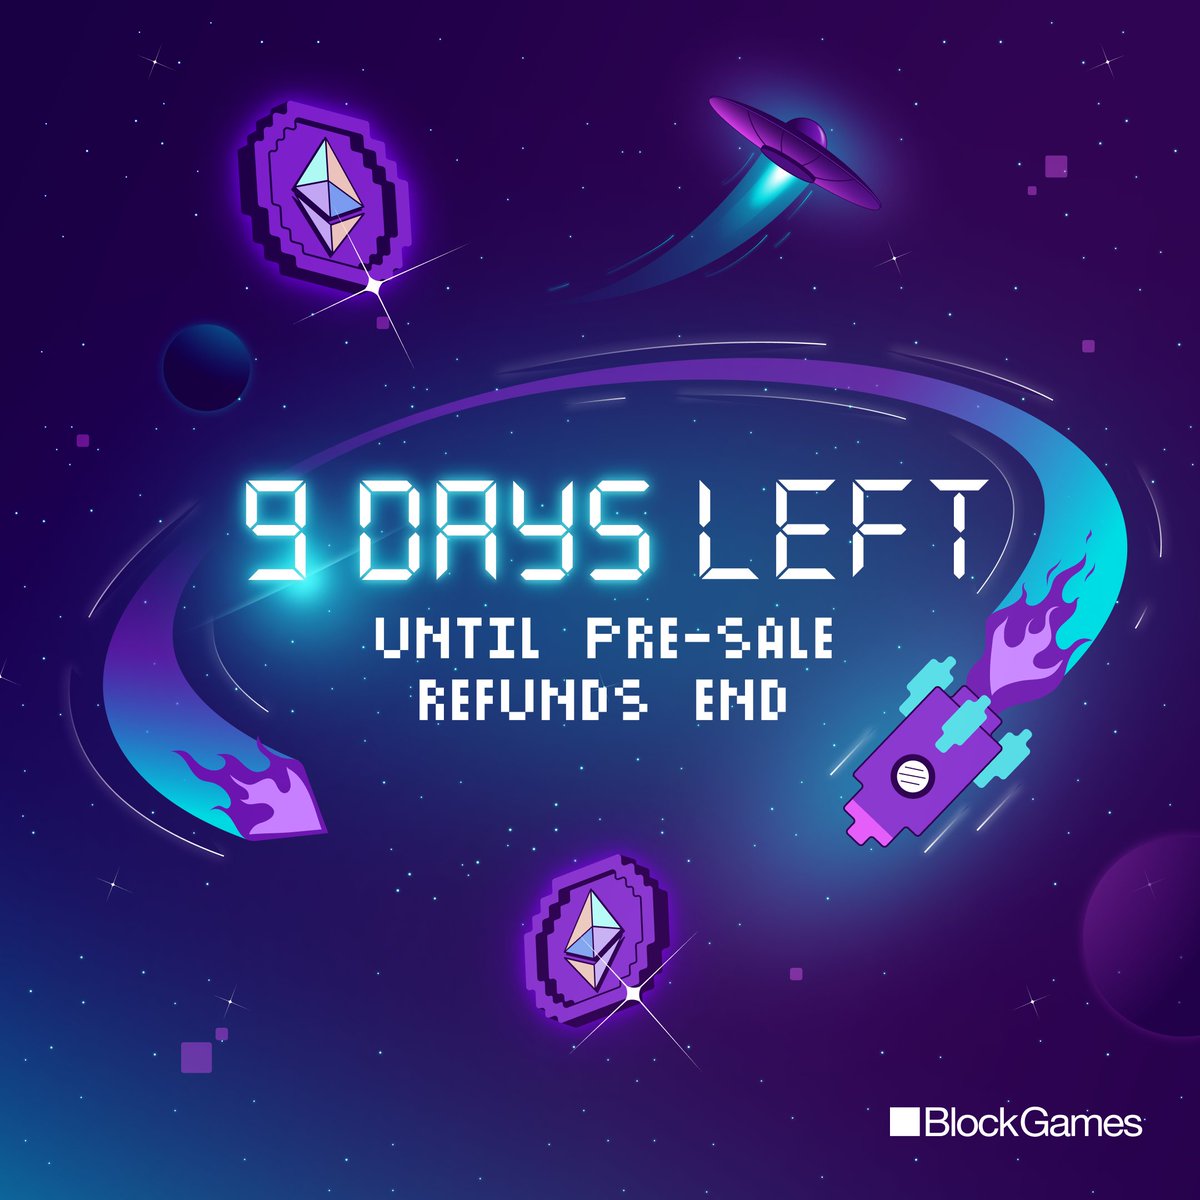 🟪 Pre-sale Refund Reminder!

9 days left until Pre-sale refunds end.

Make sure you claim your refund before the deadline.
📅 April 28

presale.blockgames.com